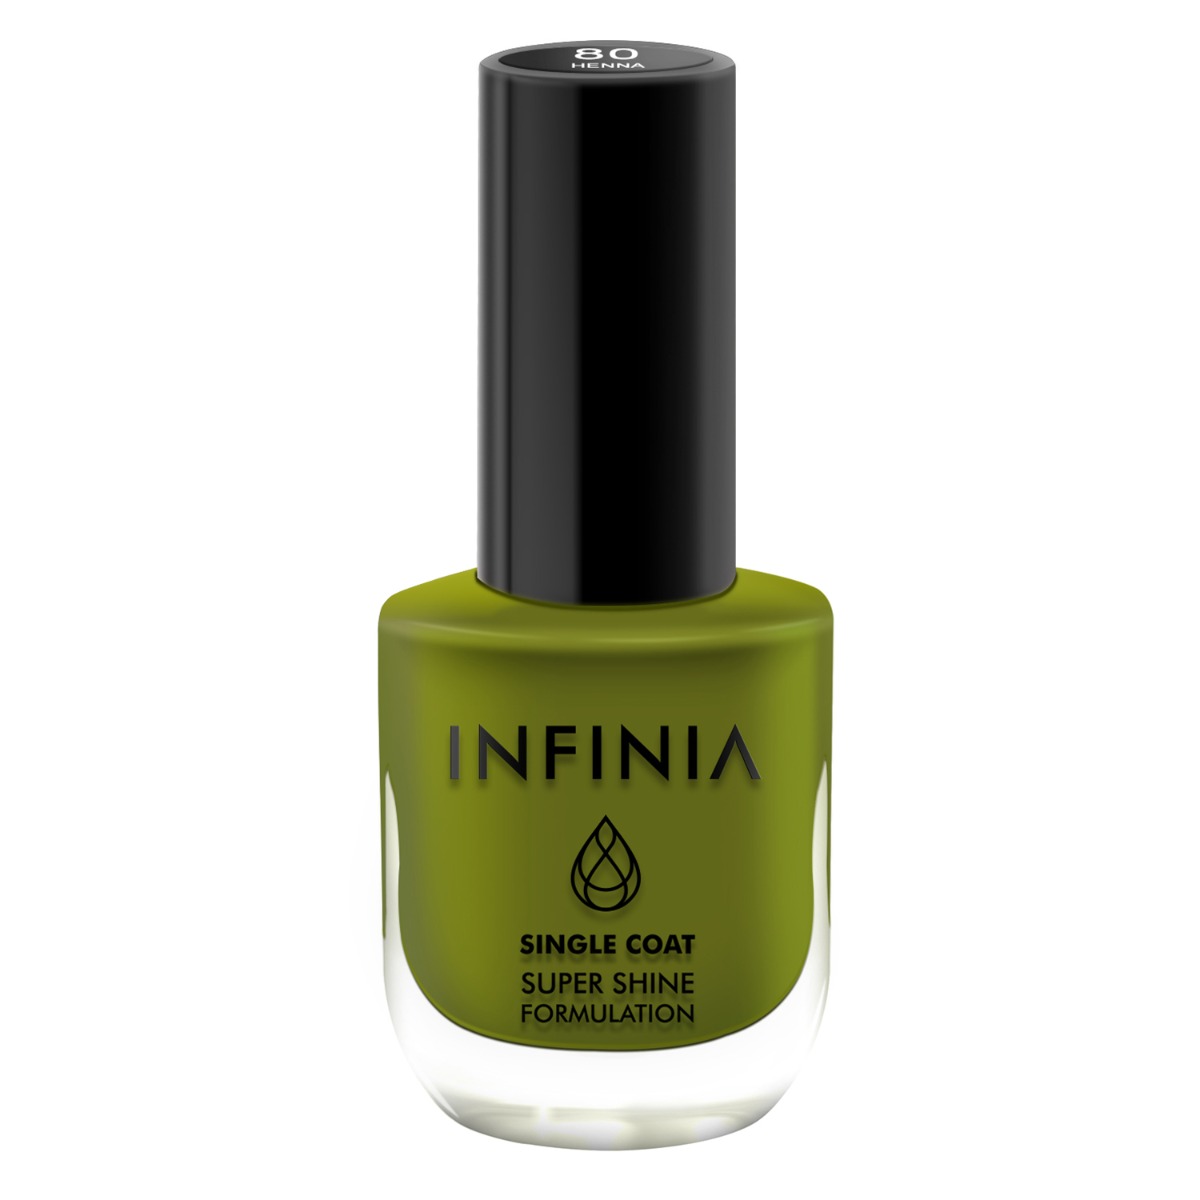 INFINIA Single Coat Super Shine Nail Polish With Ultra High Gloss, 12ml-080 Henna